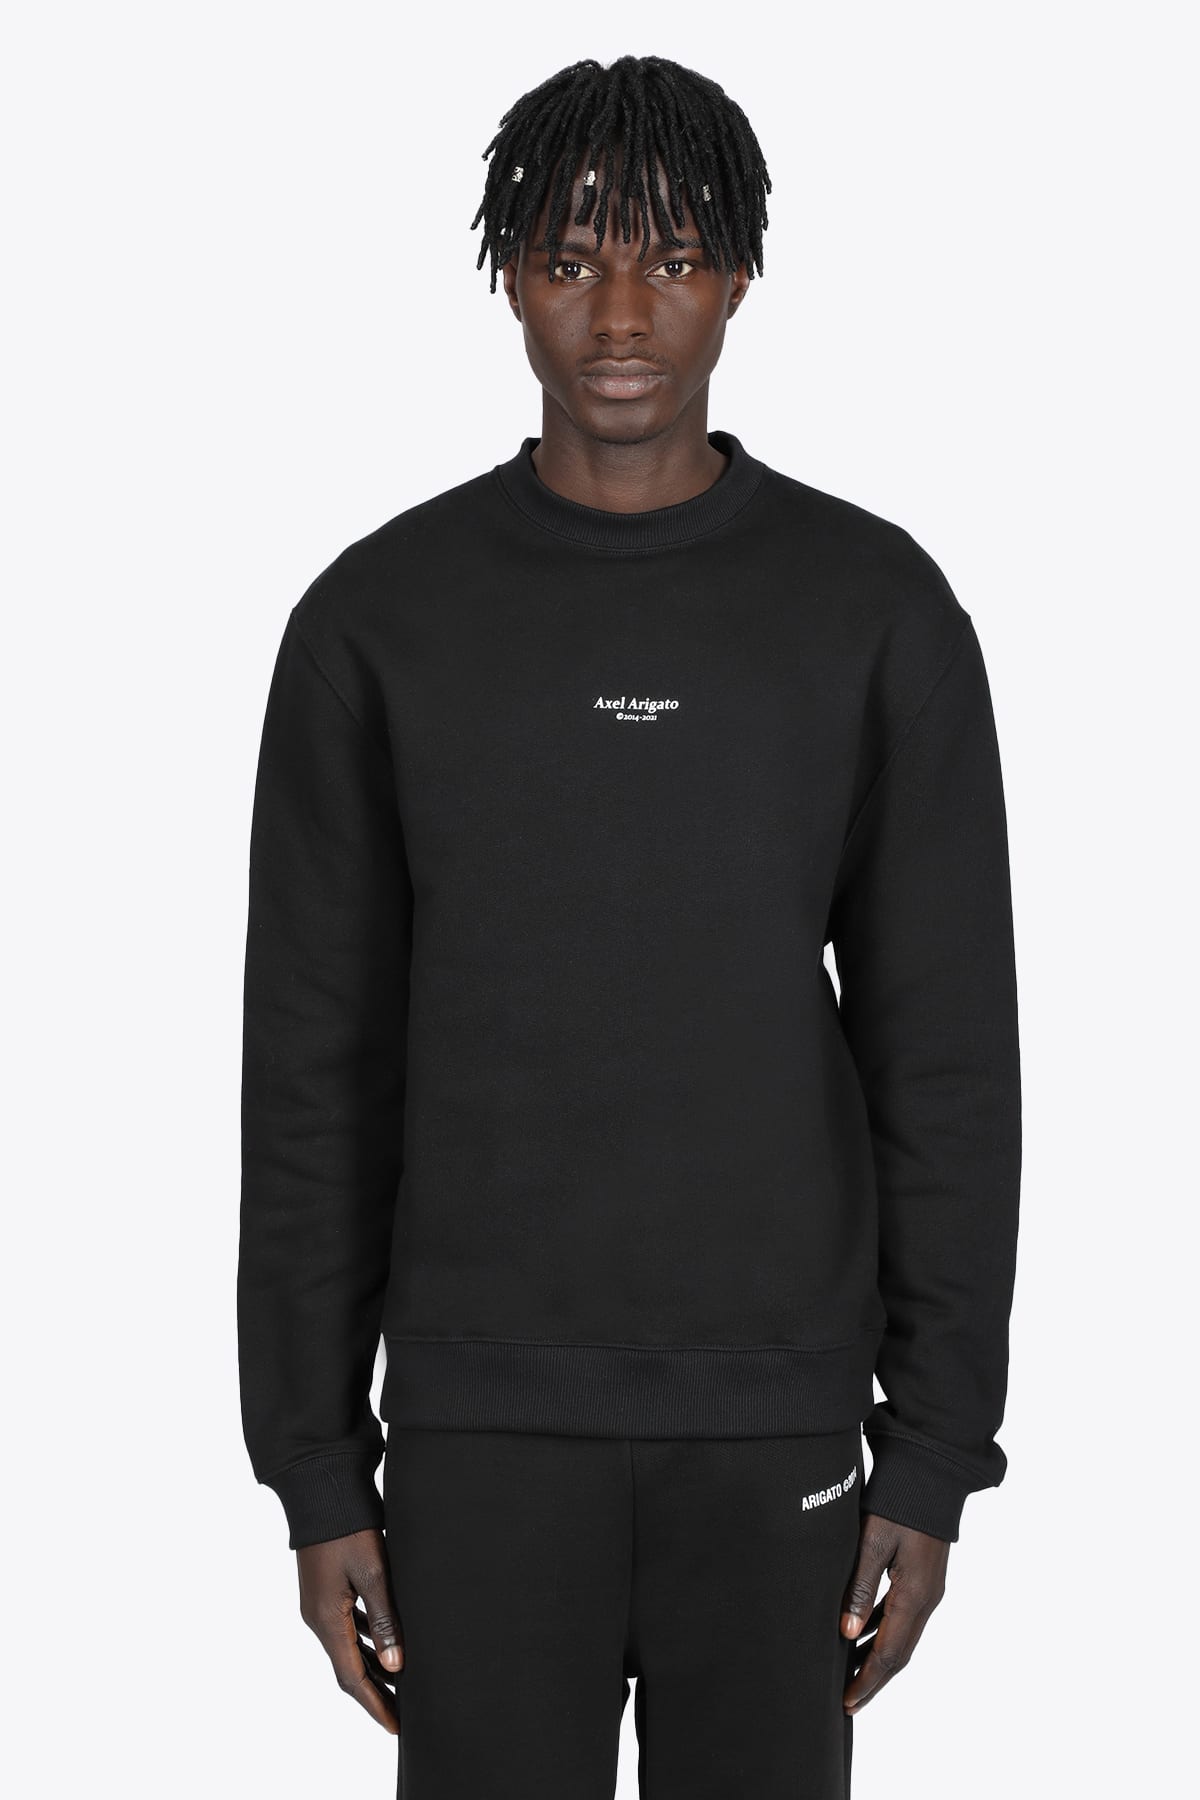 Axel Arigato Focus Sweatshirt Black cotton sweatshirt with logo